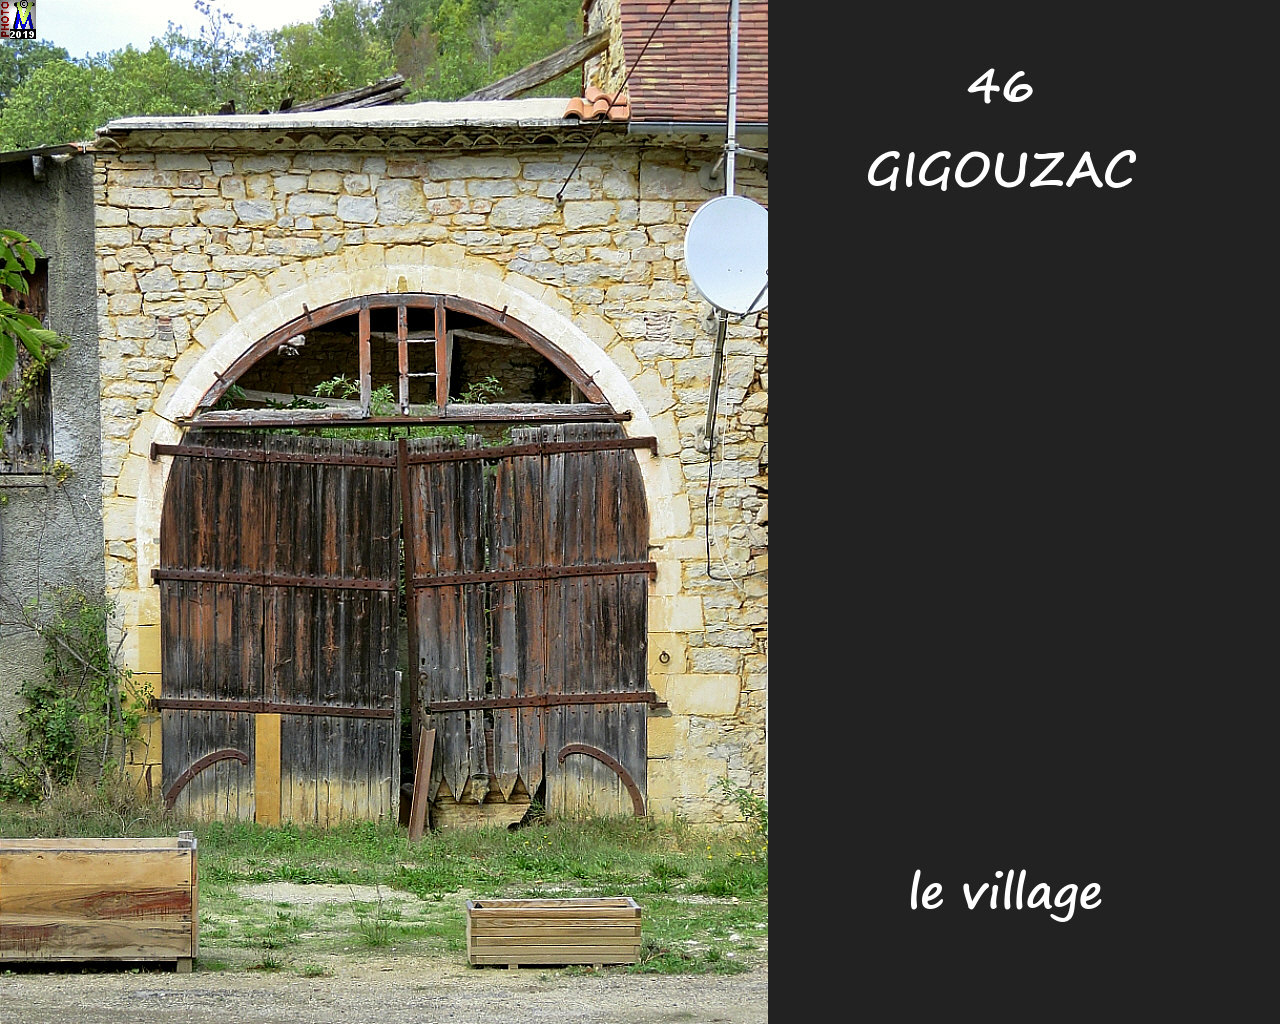 46GIGOUZAC_village_114.jpg